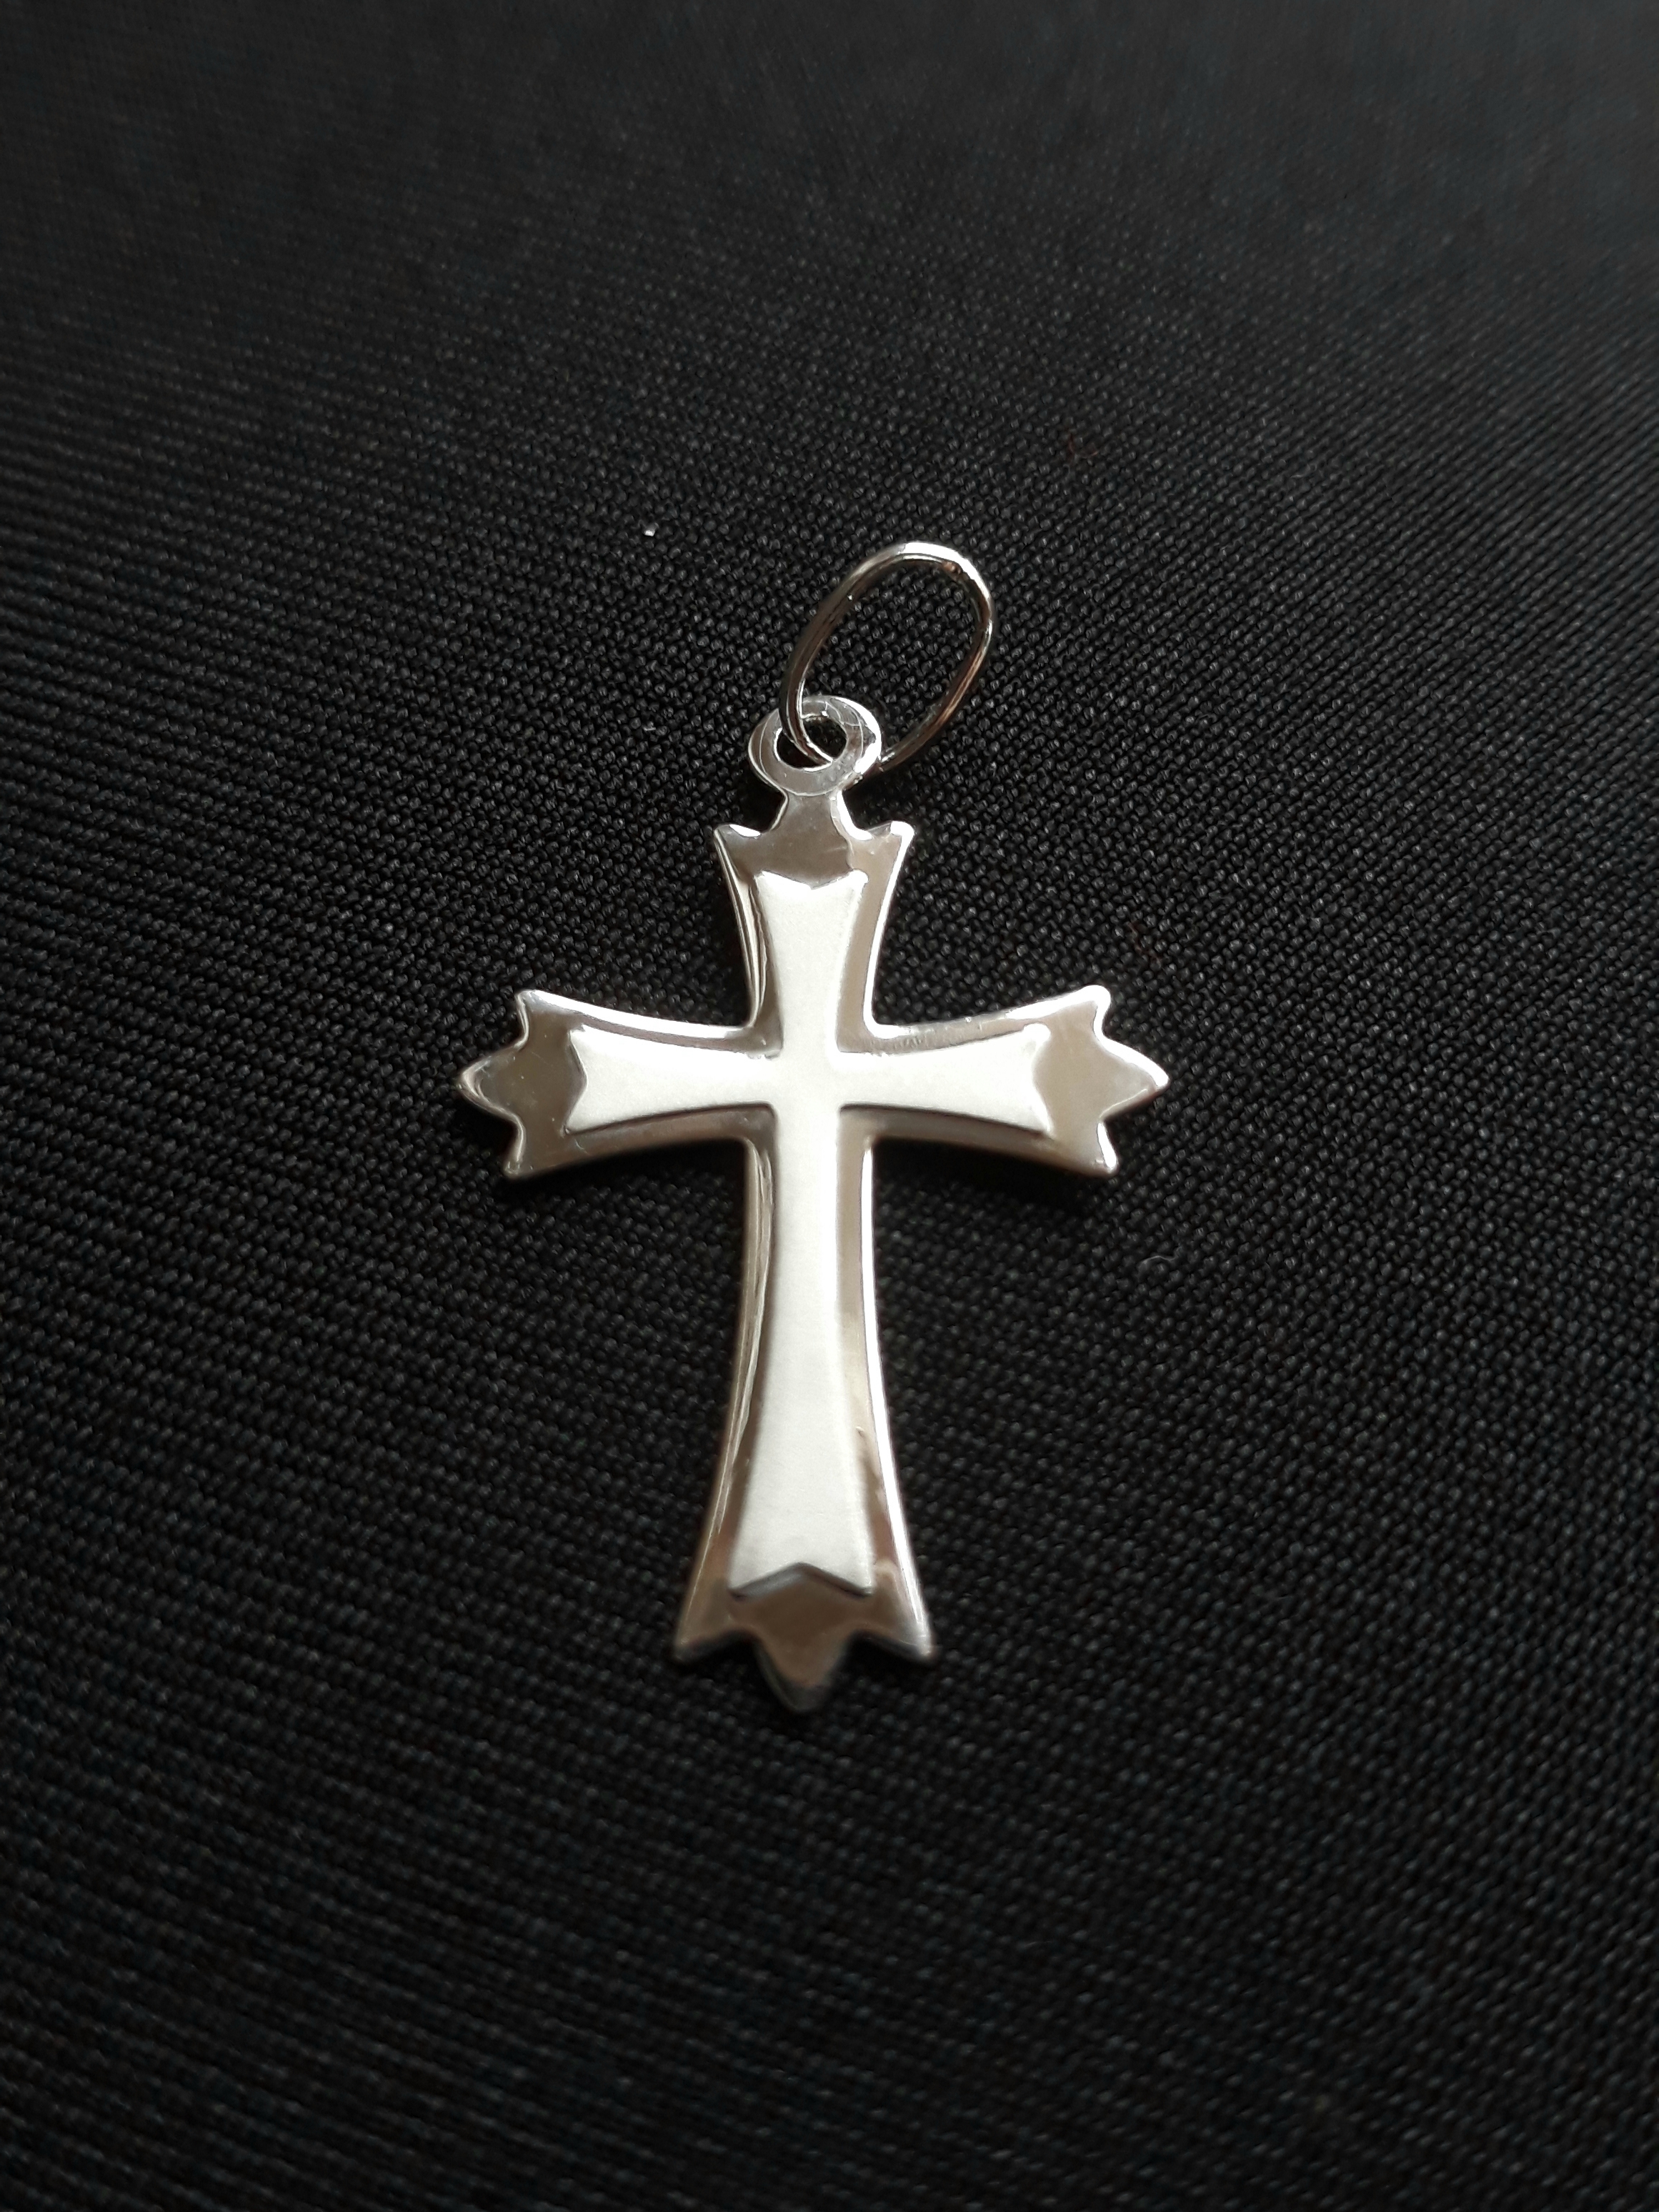 Křížek (stříbro) 3,2 cm matný střed